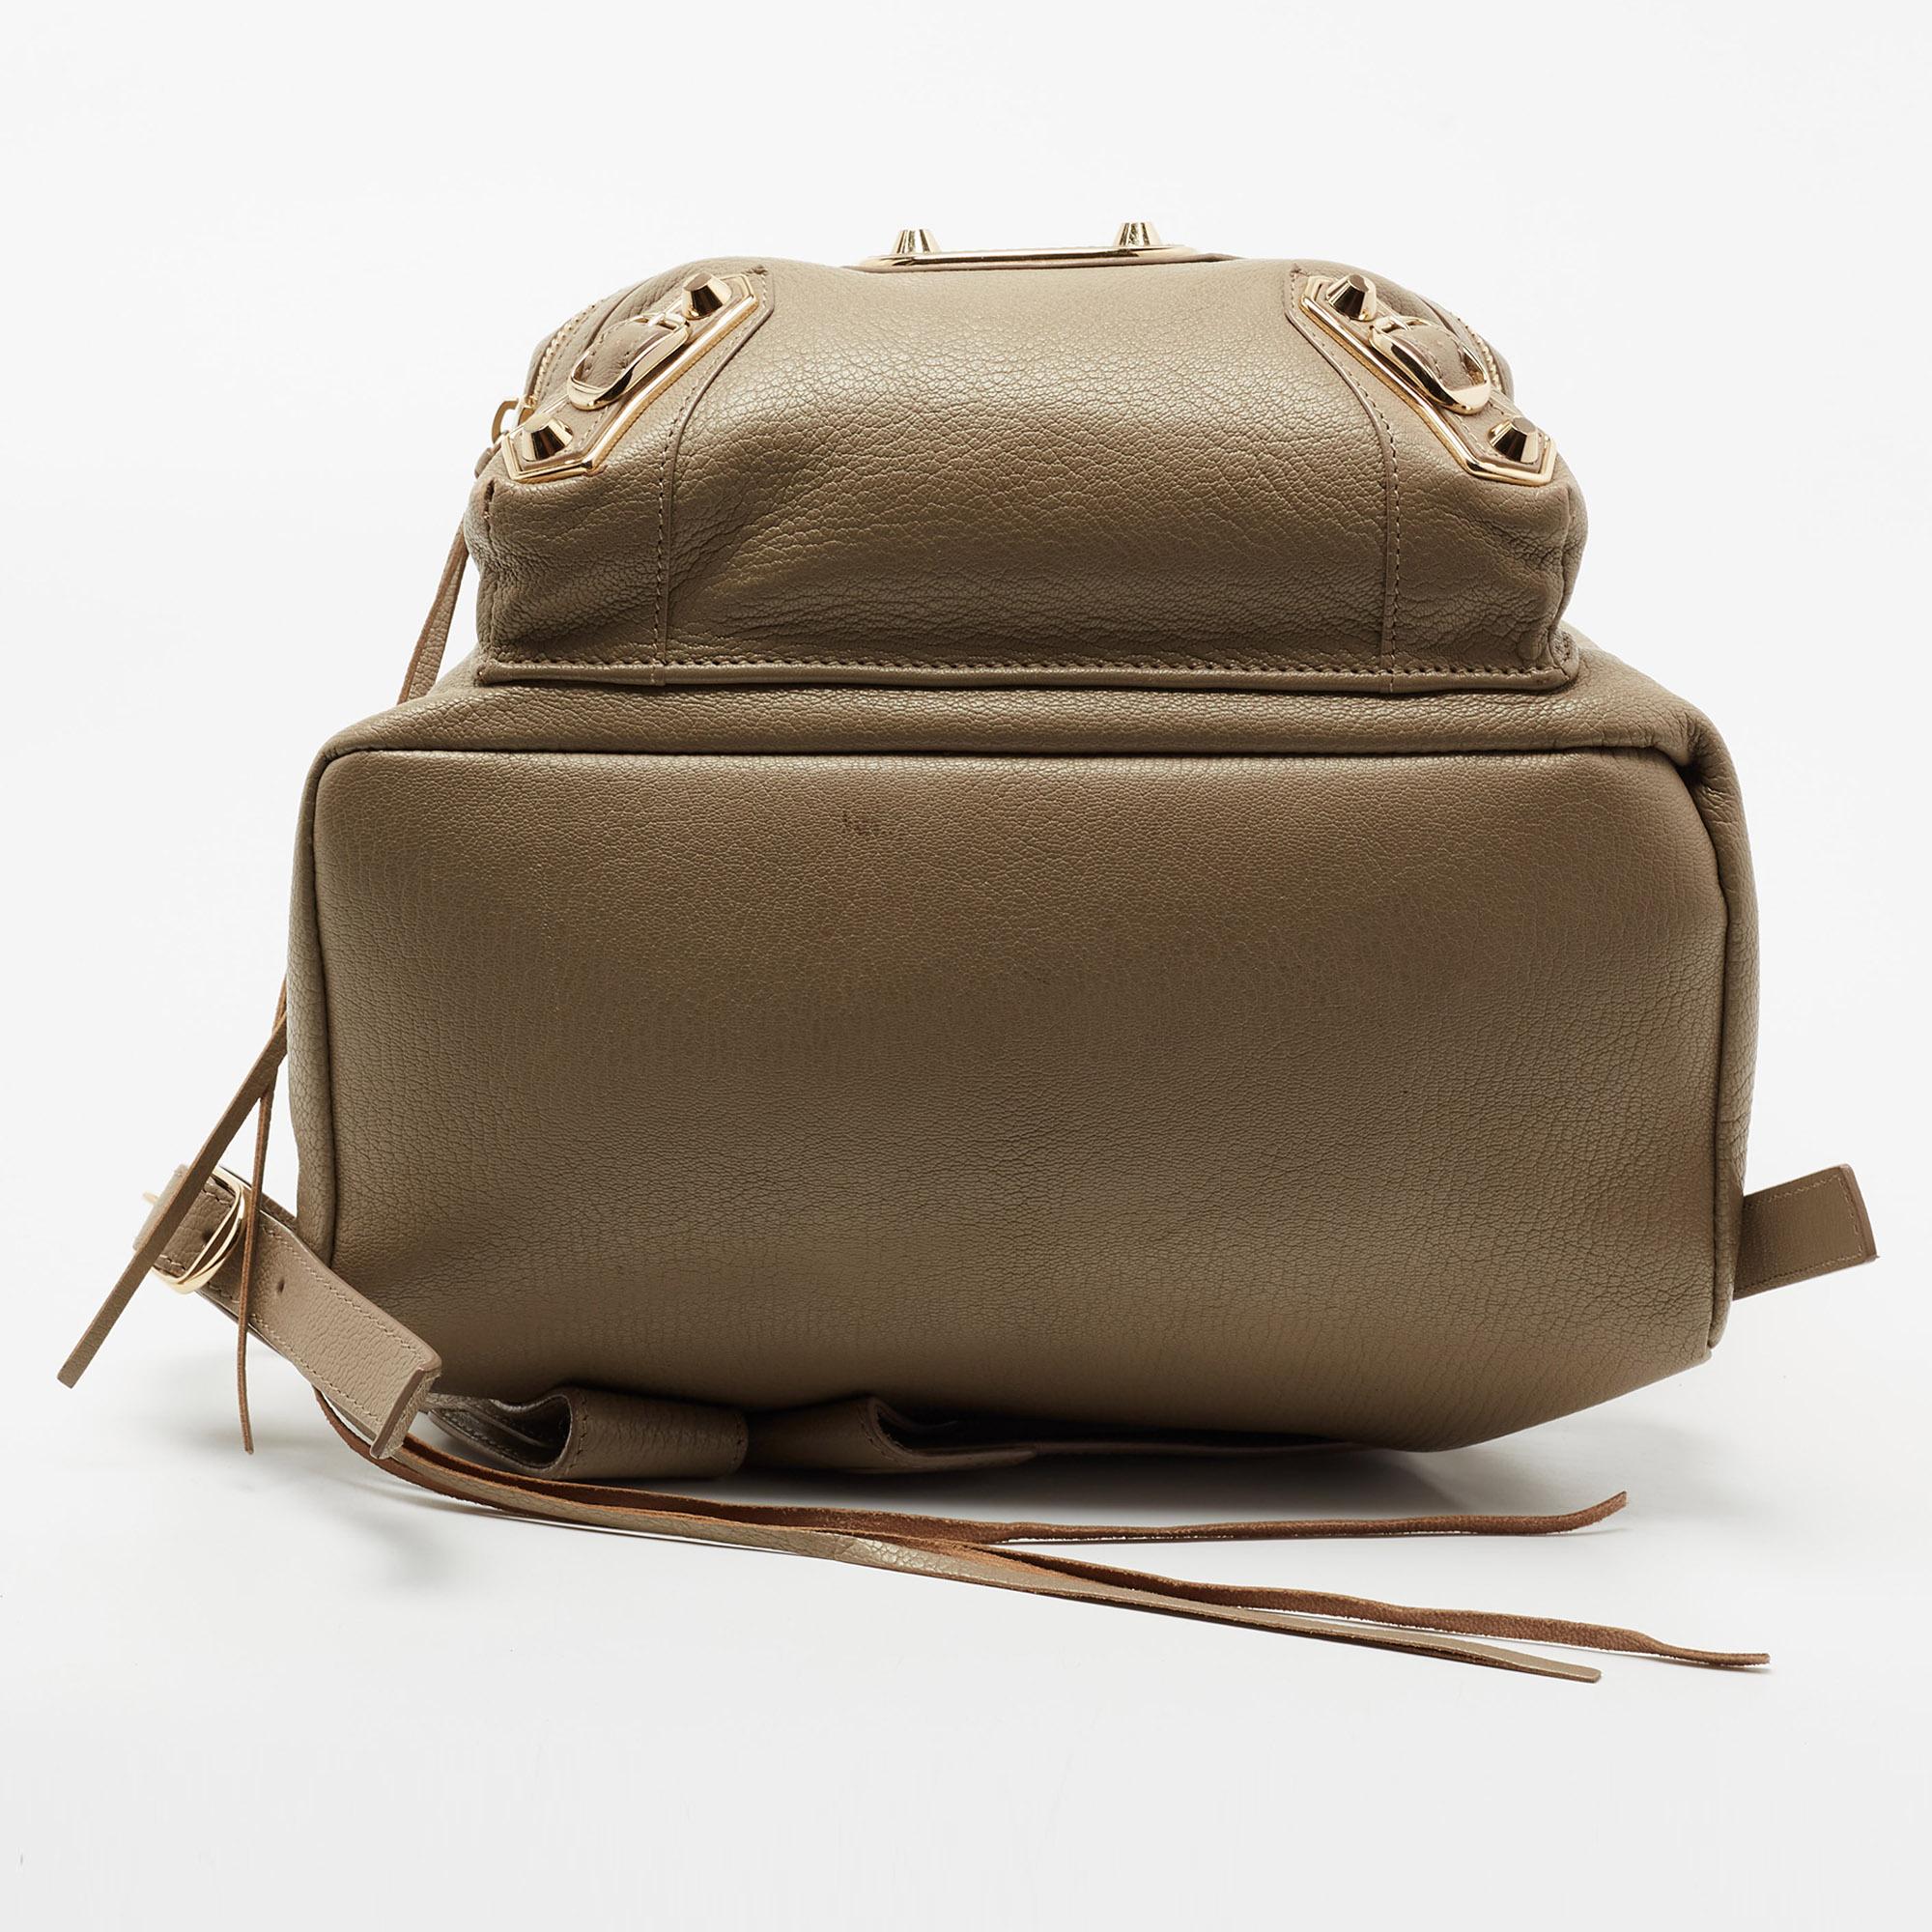 balenciaga leather backpack